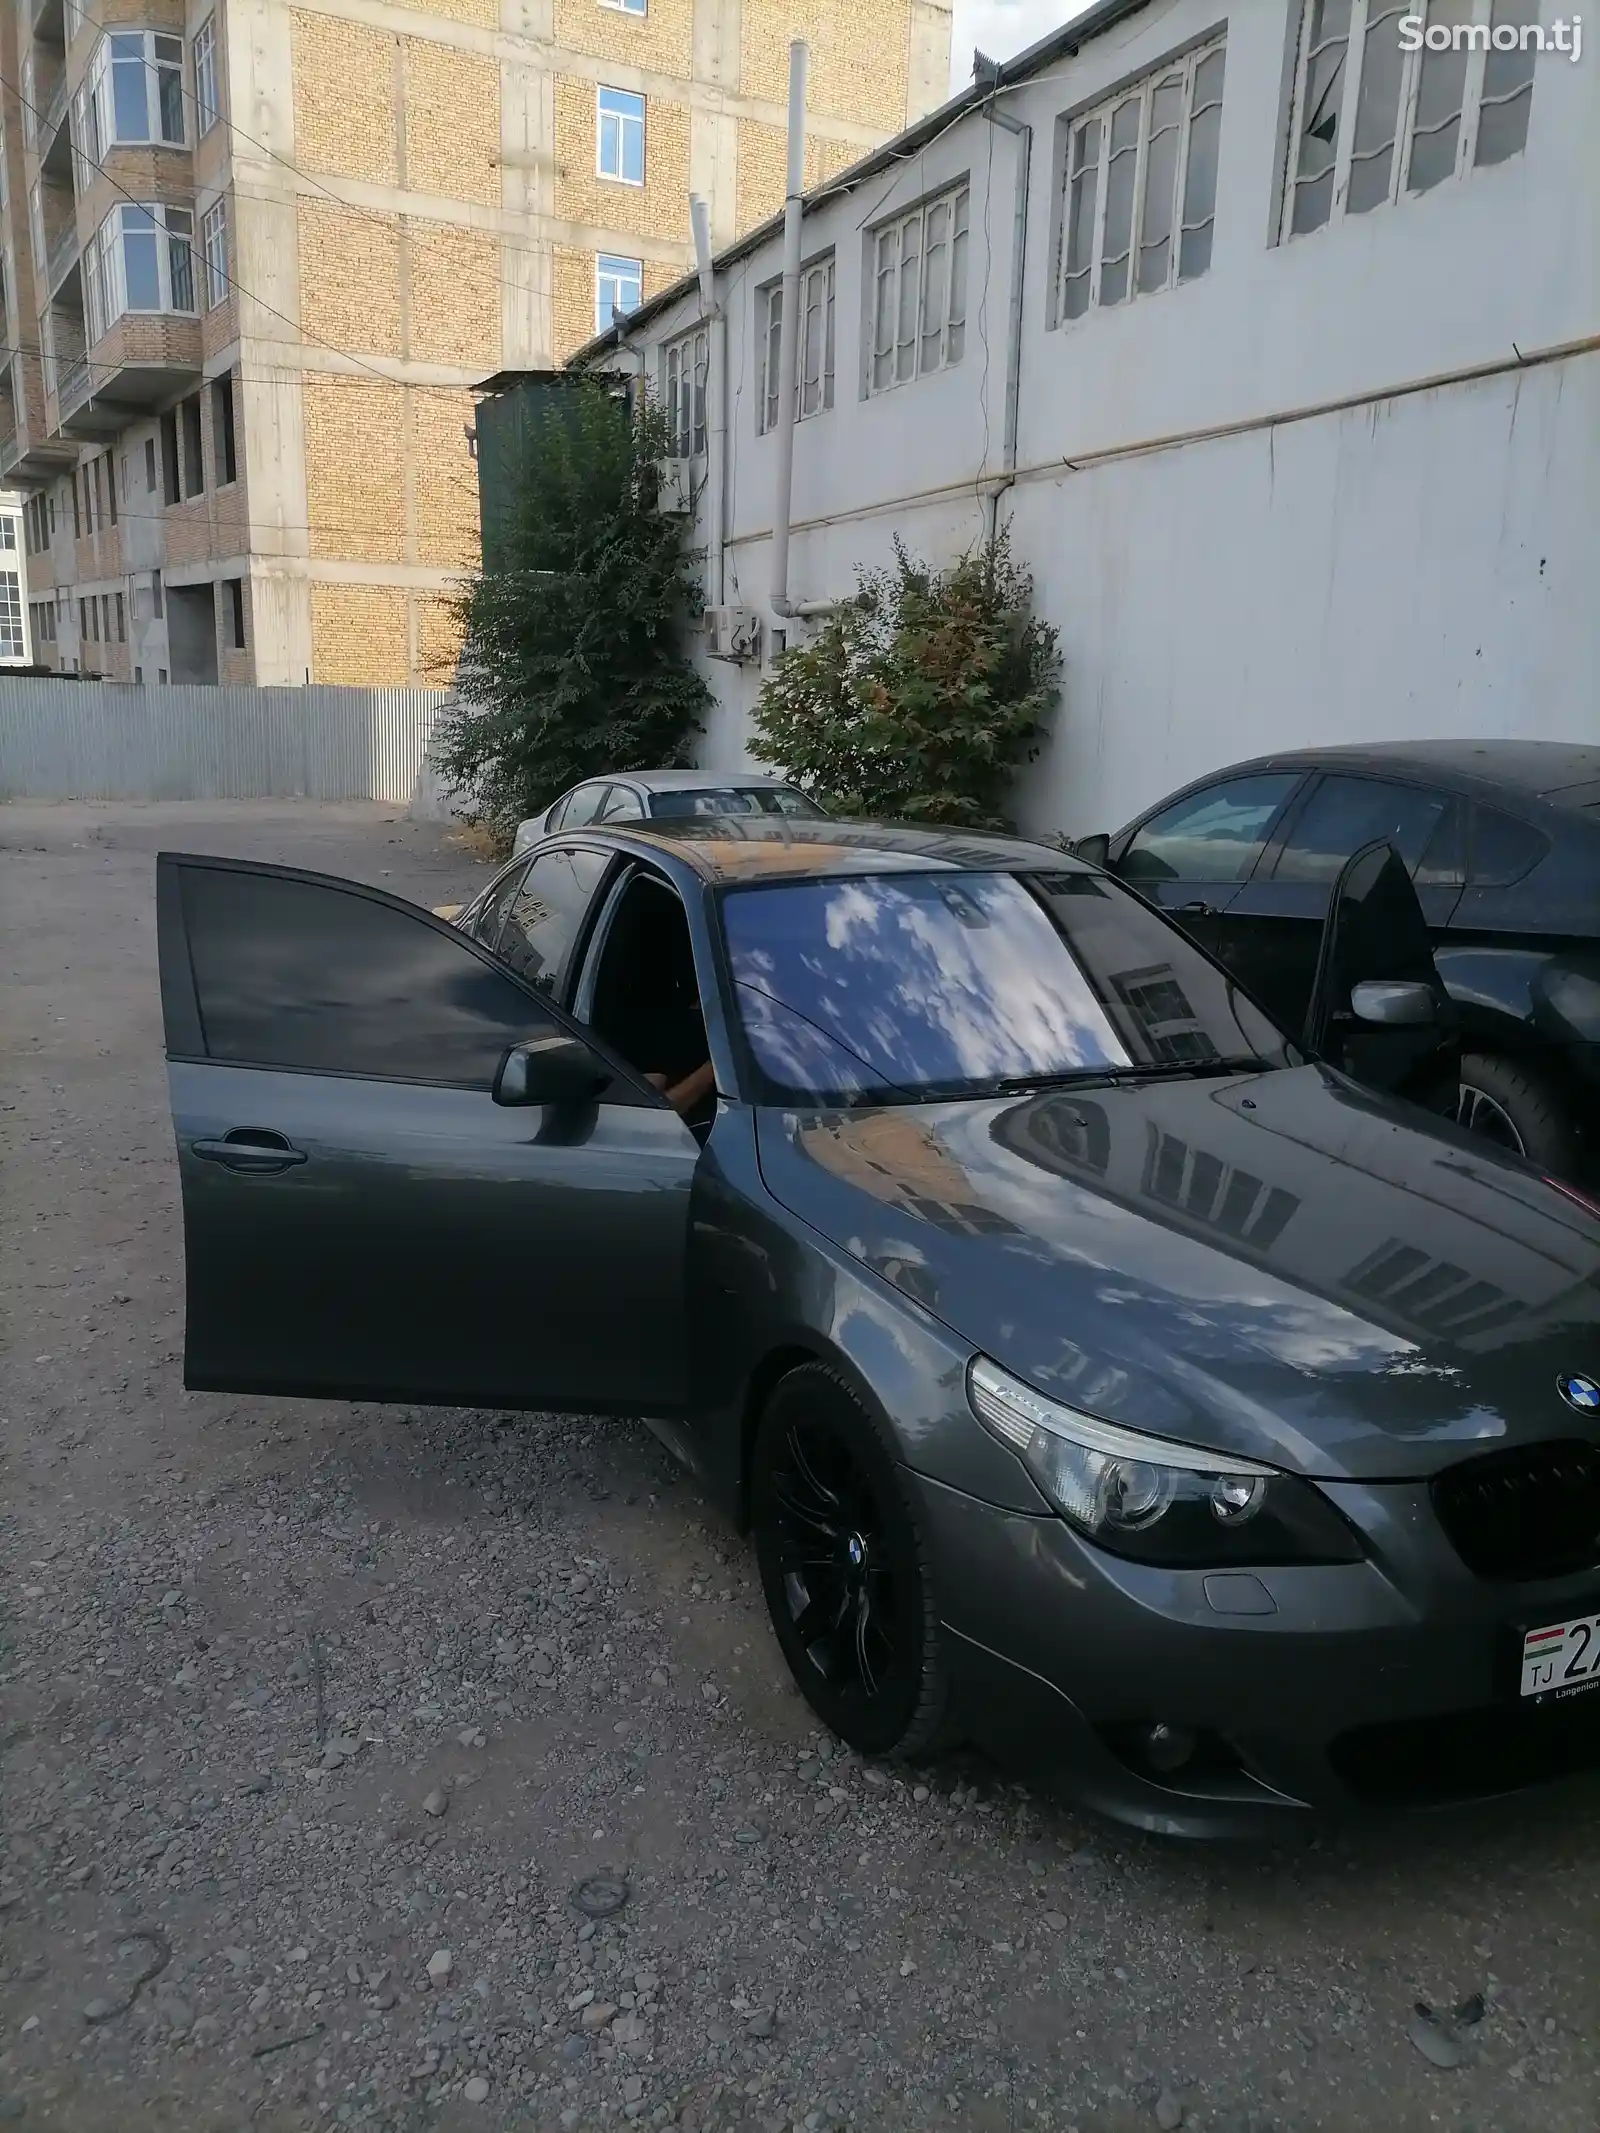 BMW 5 series, 2007-8